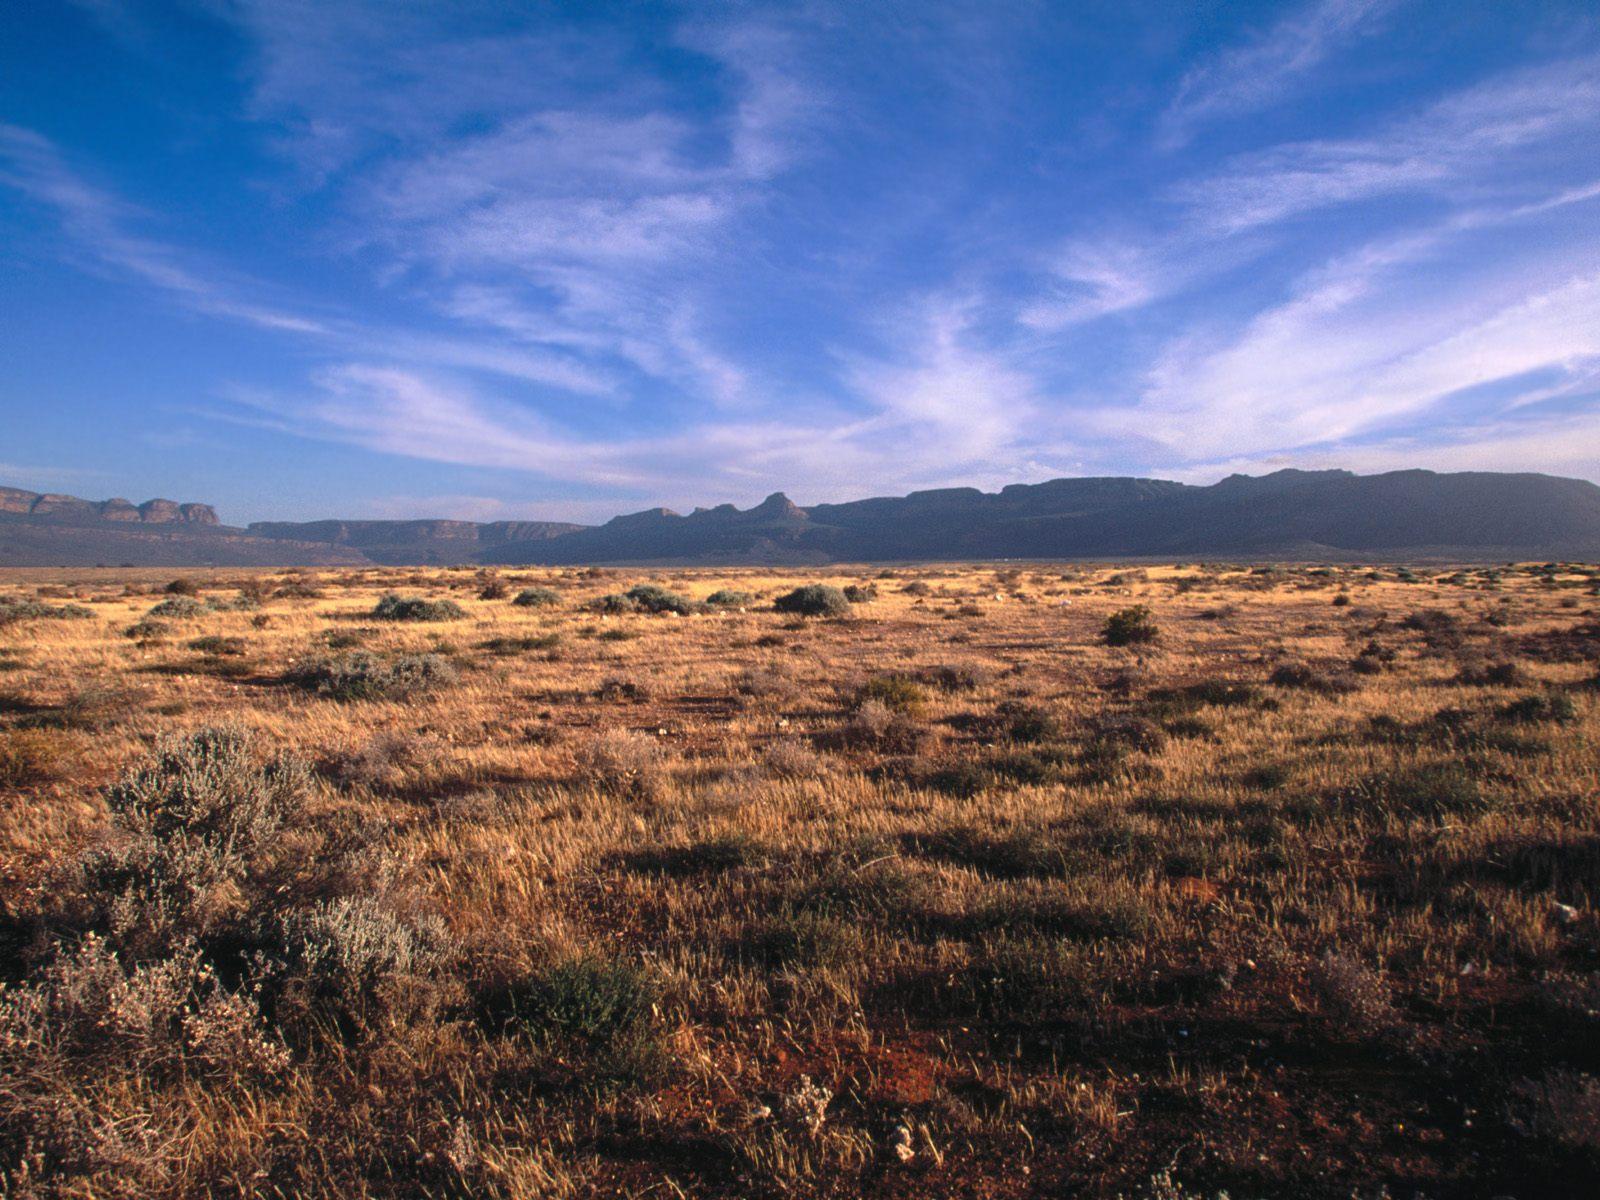 Ecosystem Based Adaptation to Climate Change in Namakwa District